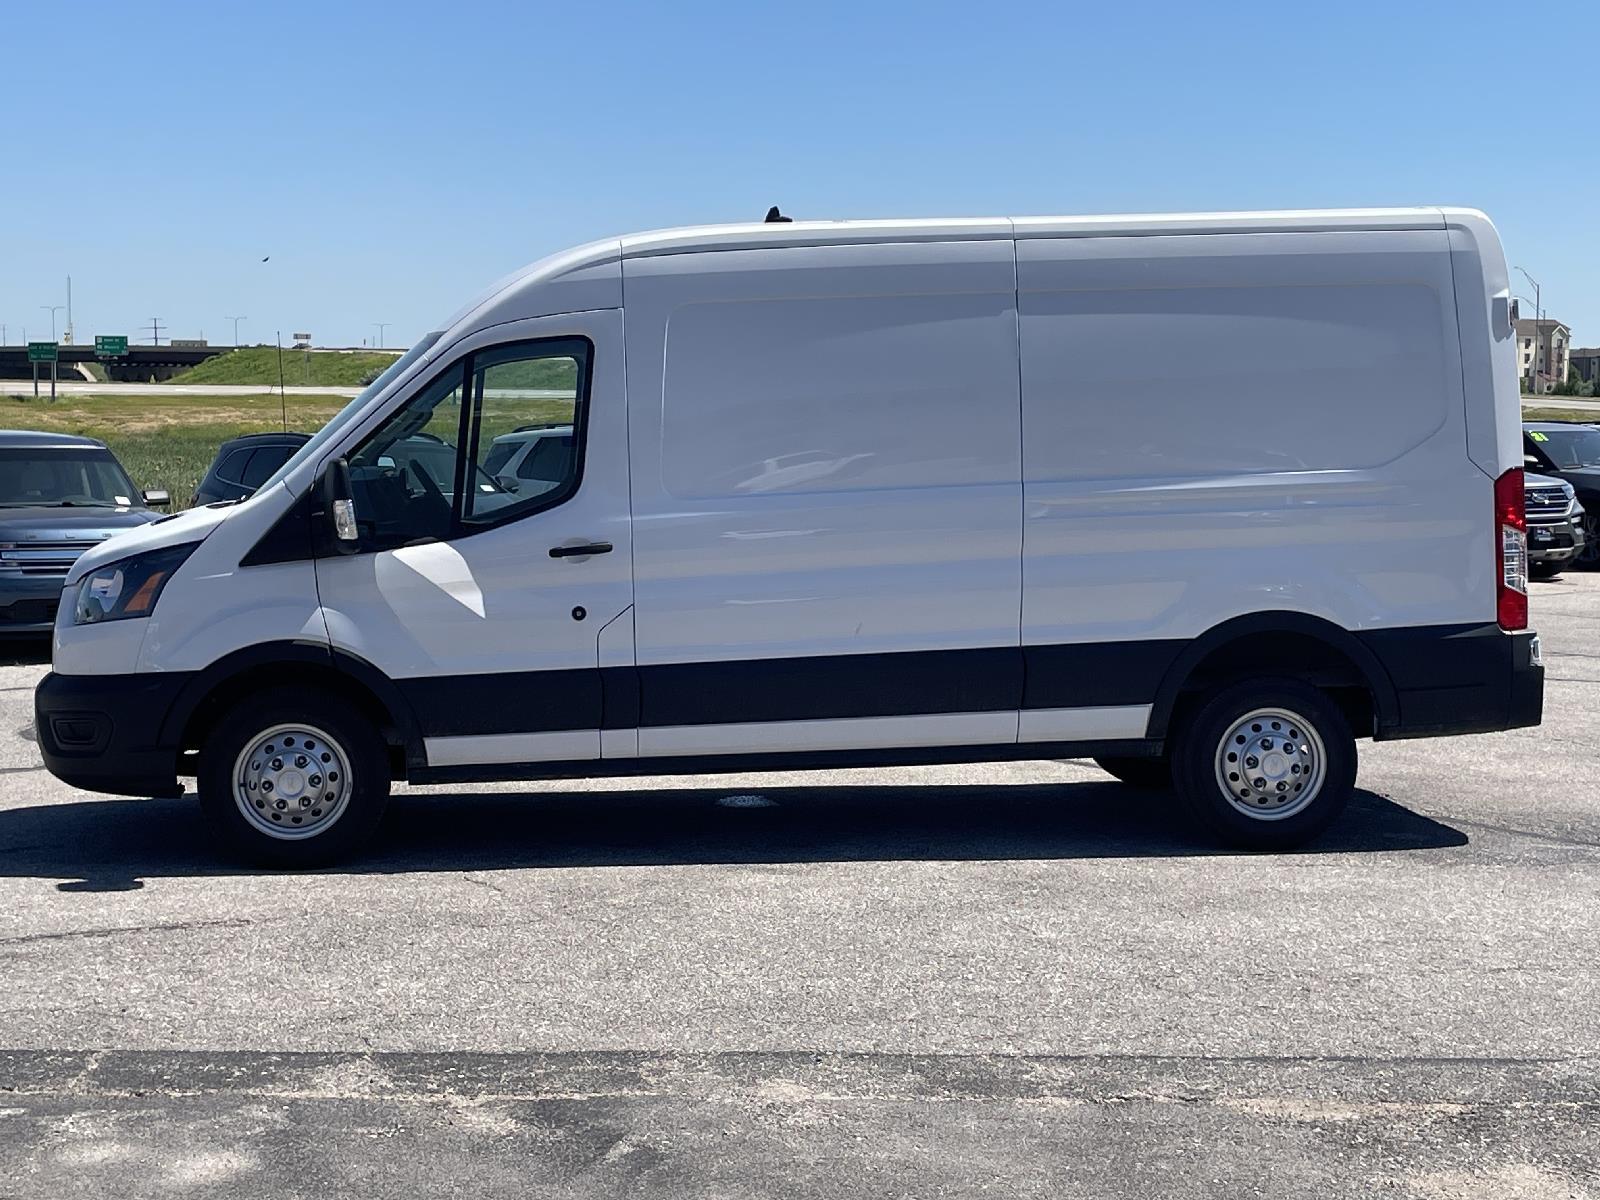 New 2023 Ford Transit Cargo Van  Full-Sized Van for sale in Lincoln NE